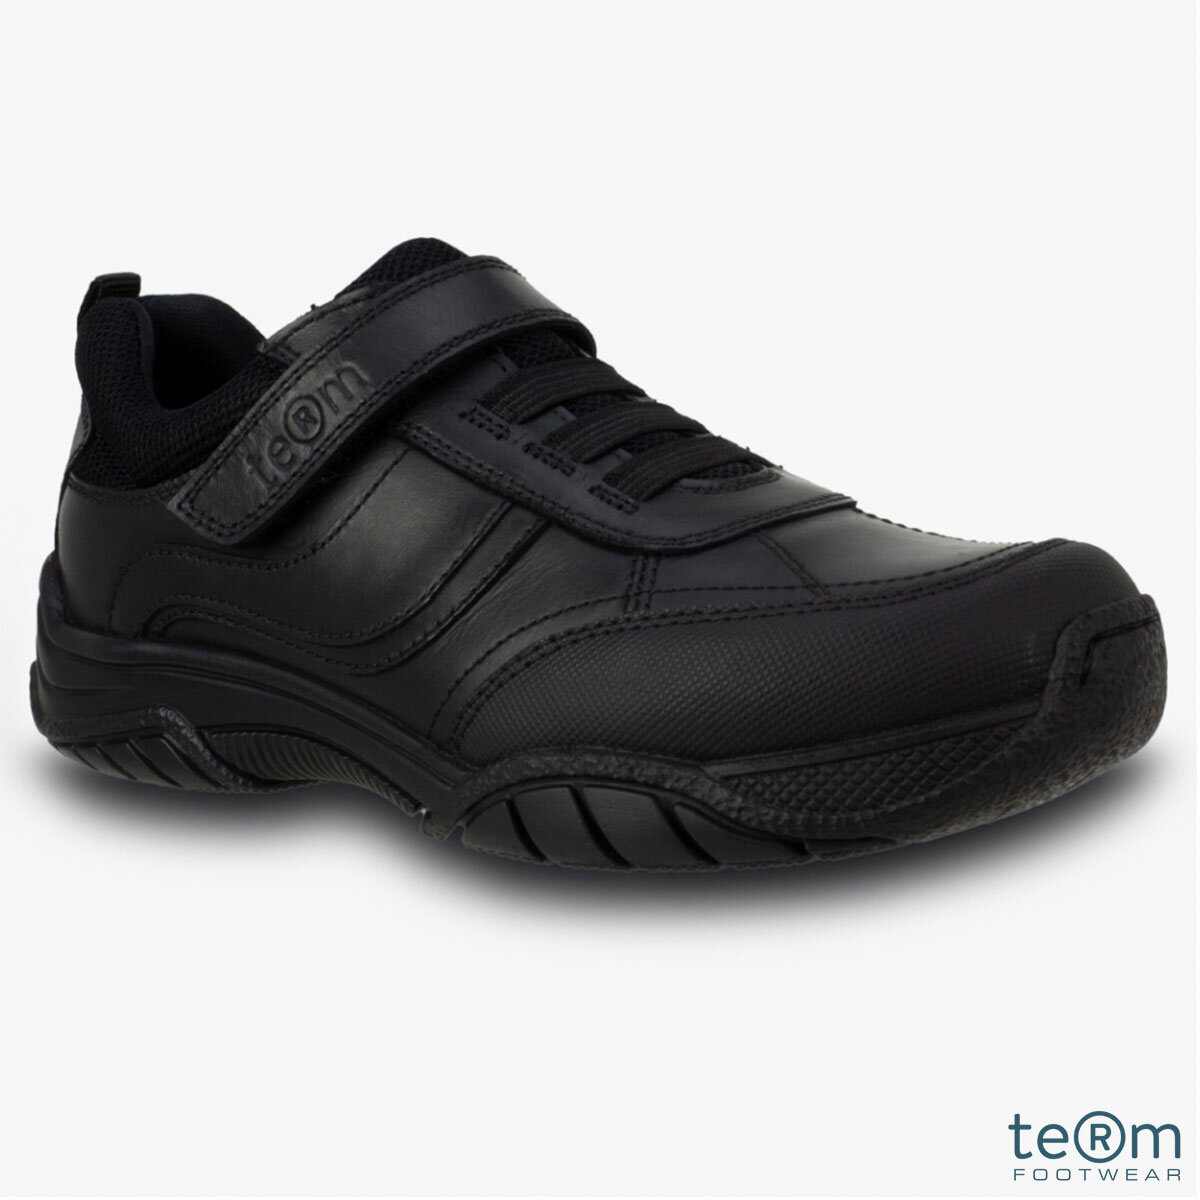 TeⓇm Maxx Single Touch Fastening Boy's School Shoes in 11 Sizes